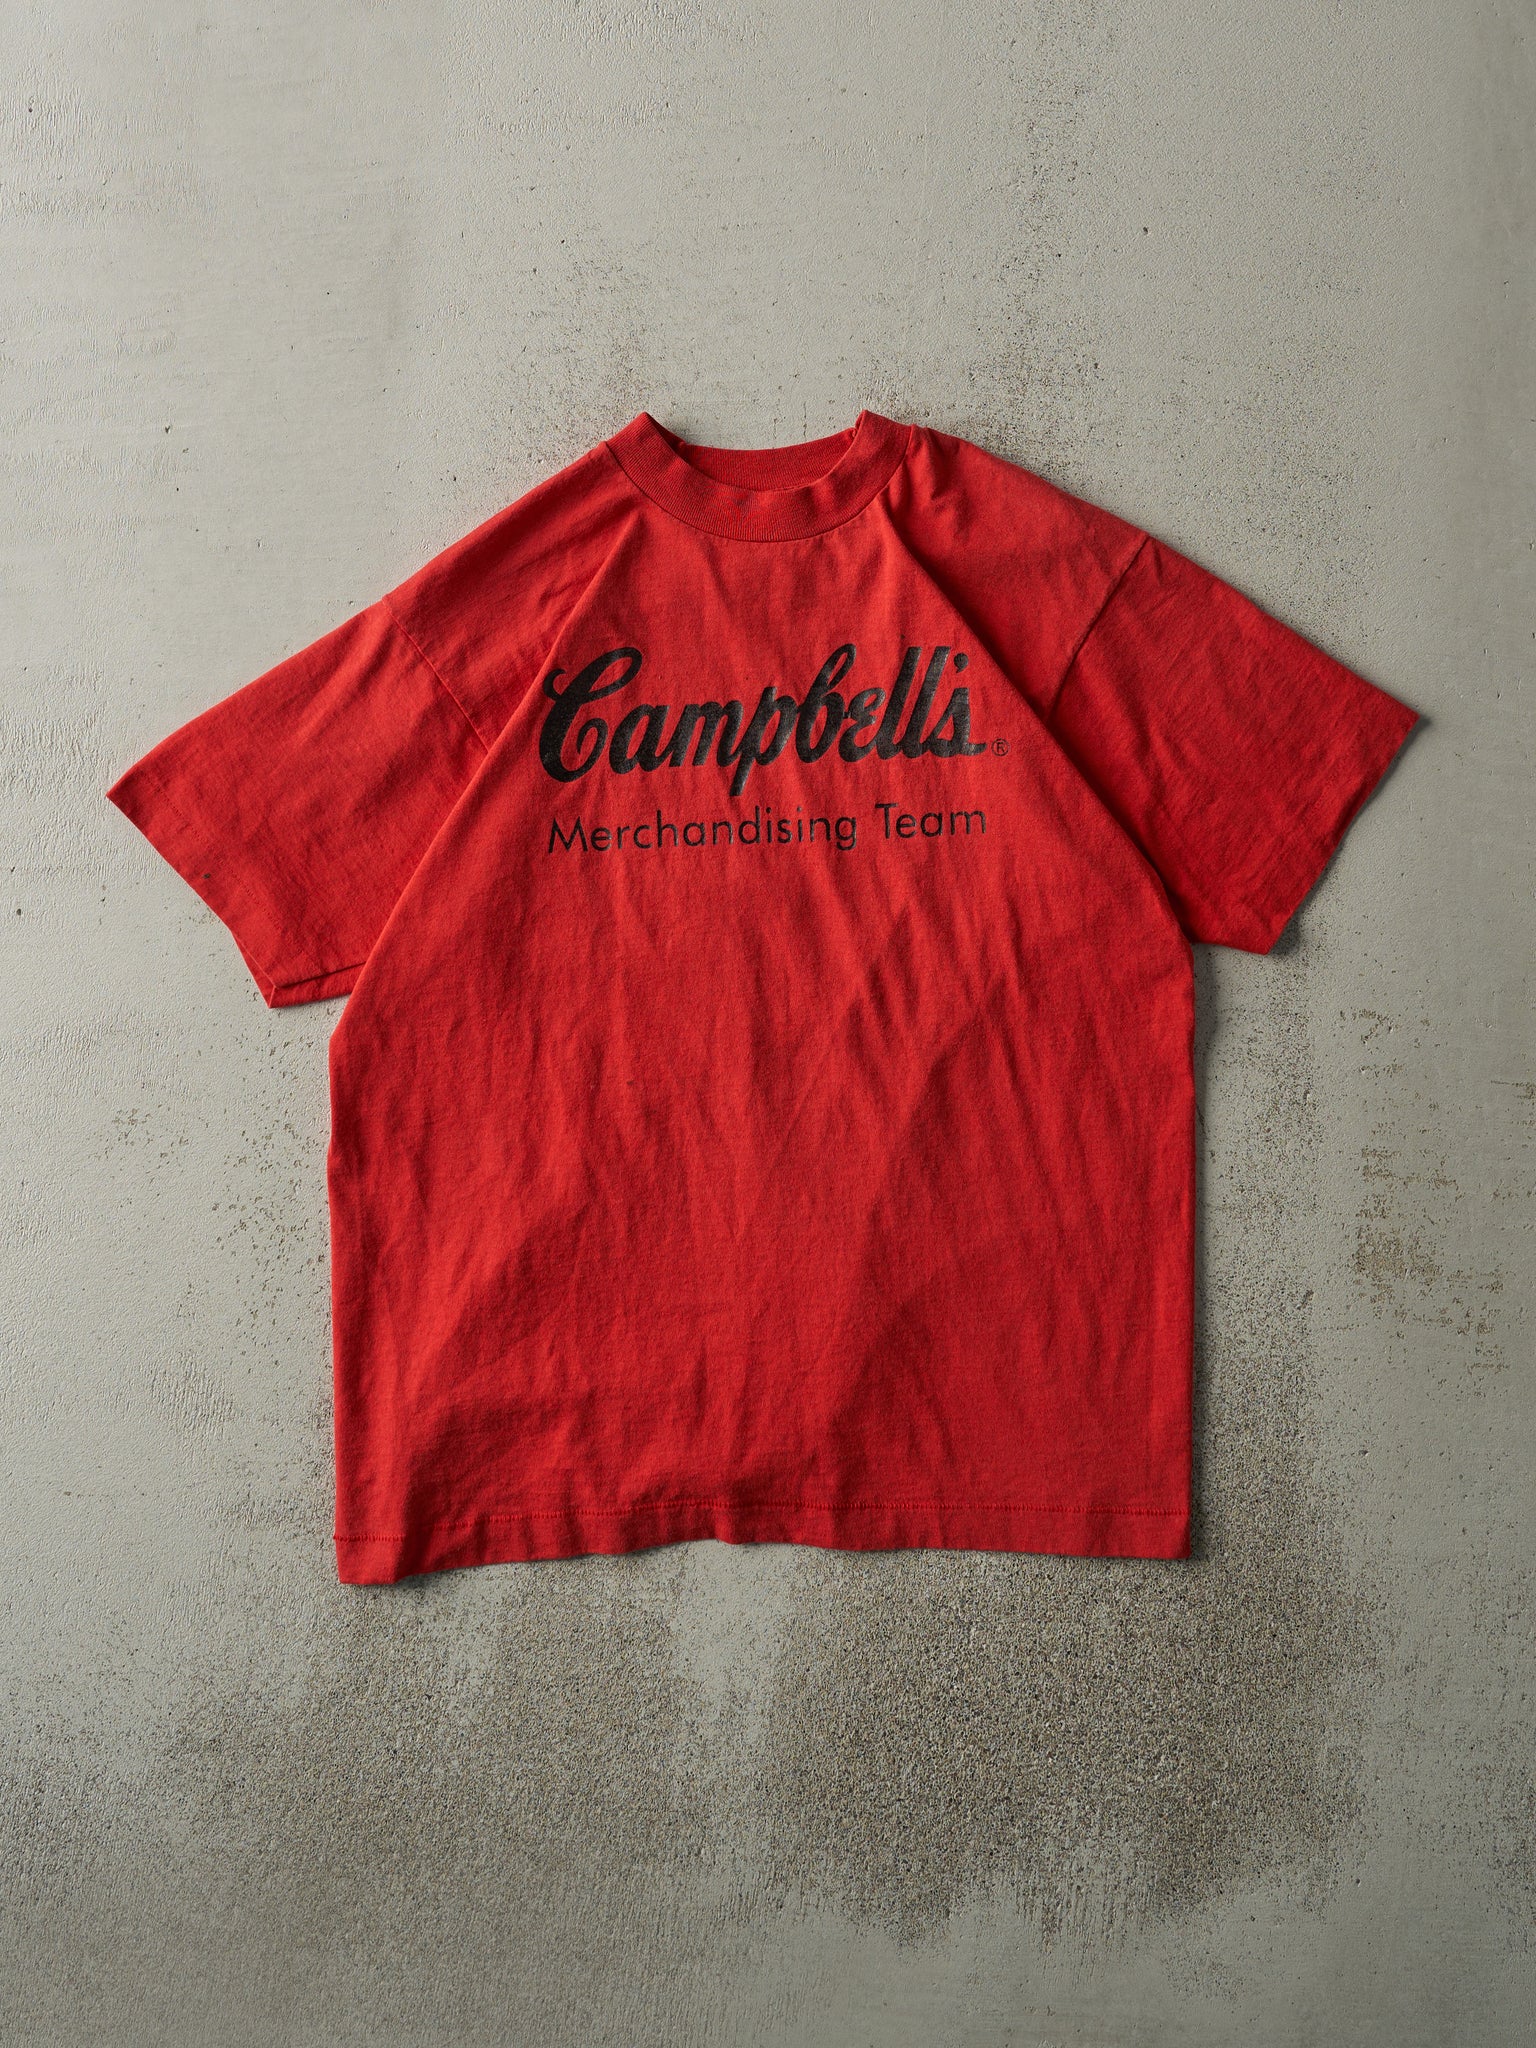 Vintage 80s Red Campbells Merchandising Team Single Stitch Tee (M)